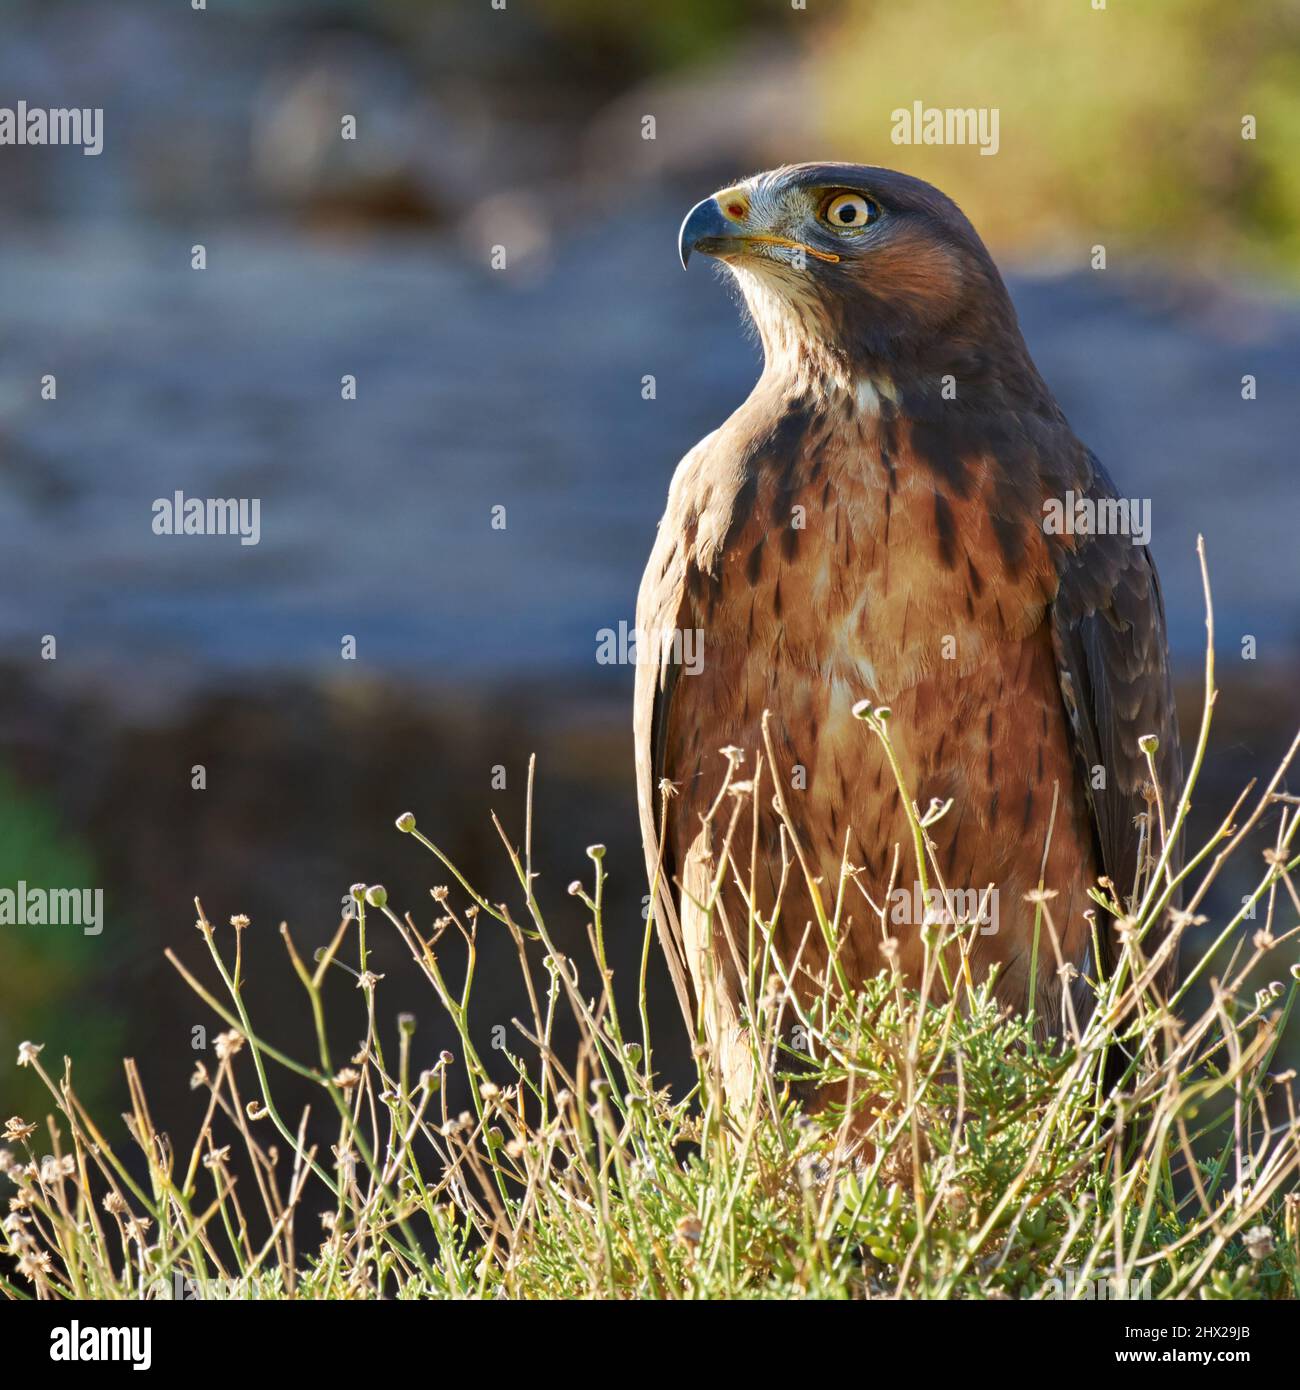 An animals eye has the power to speak. Shot of a majestic bird of prey. Stock Photo